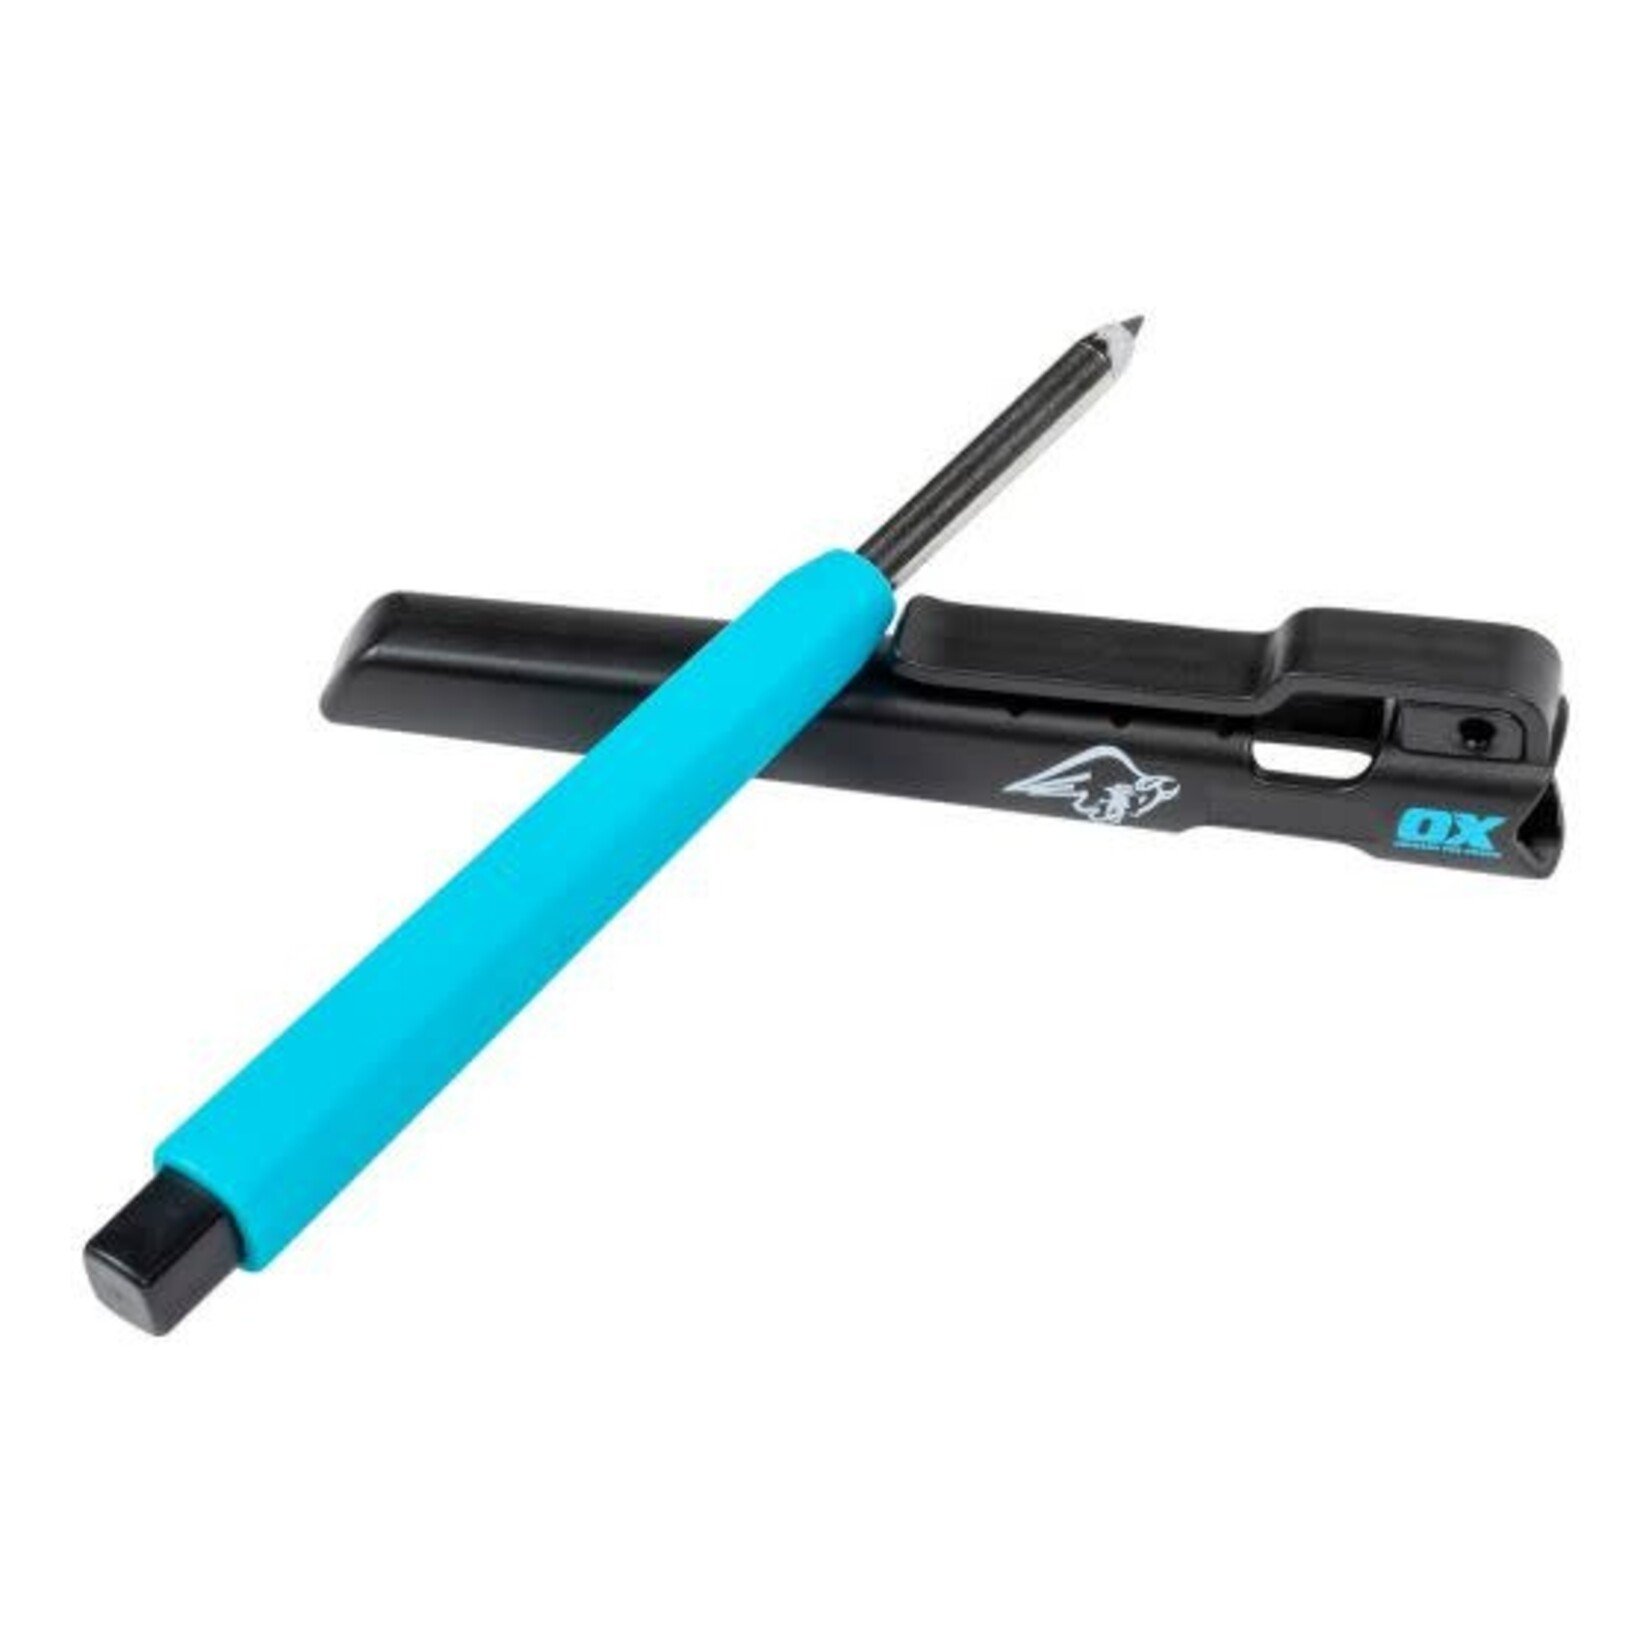 Ox Tools tuff carbon Marking pencil